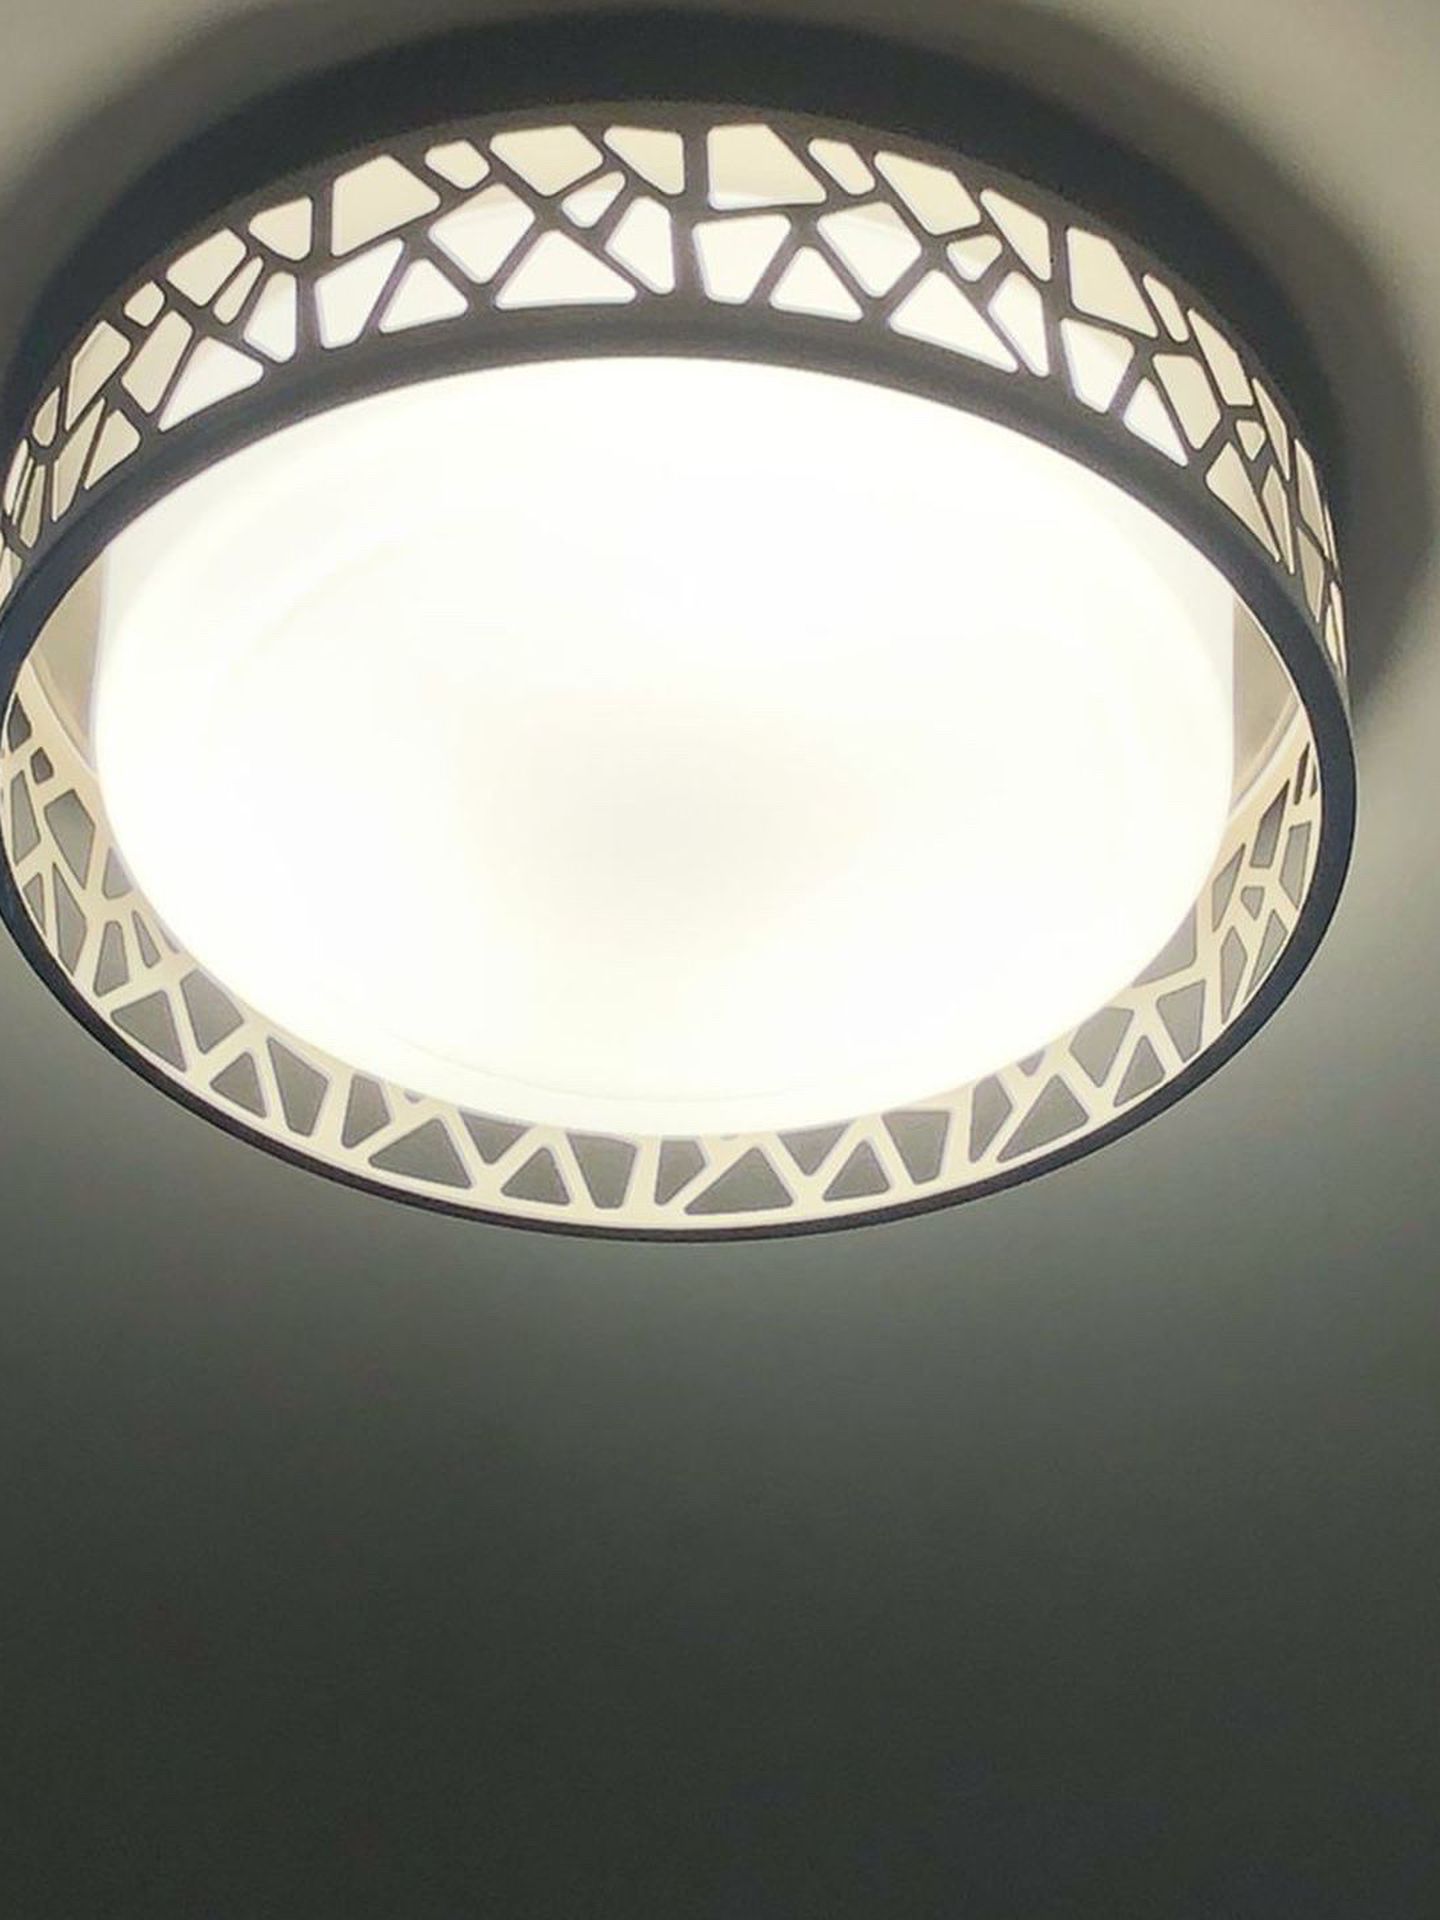 LED Light Fixture